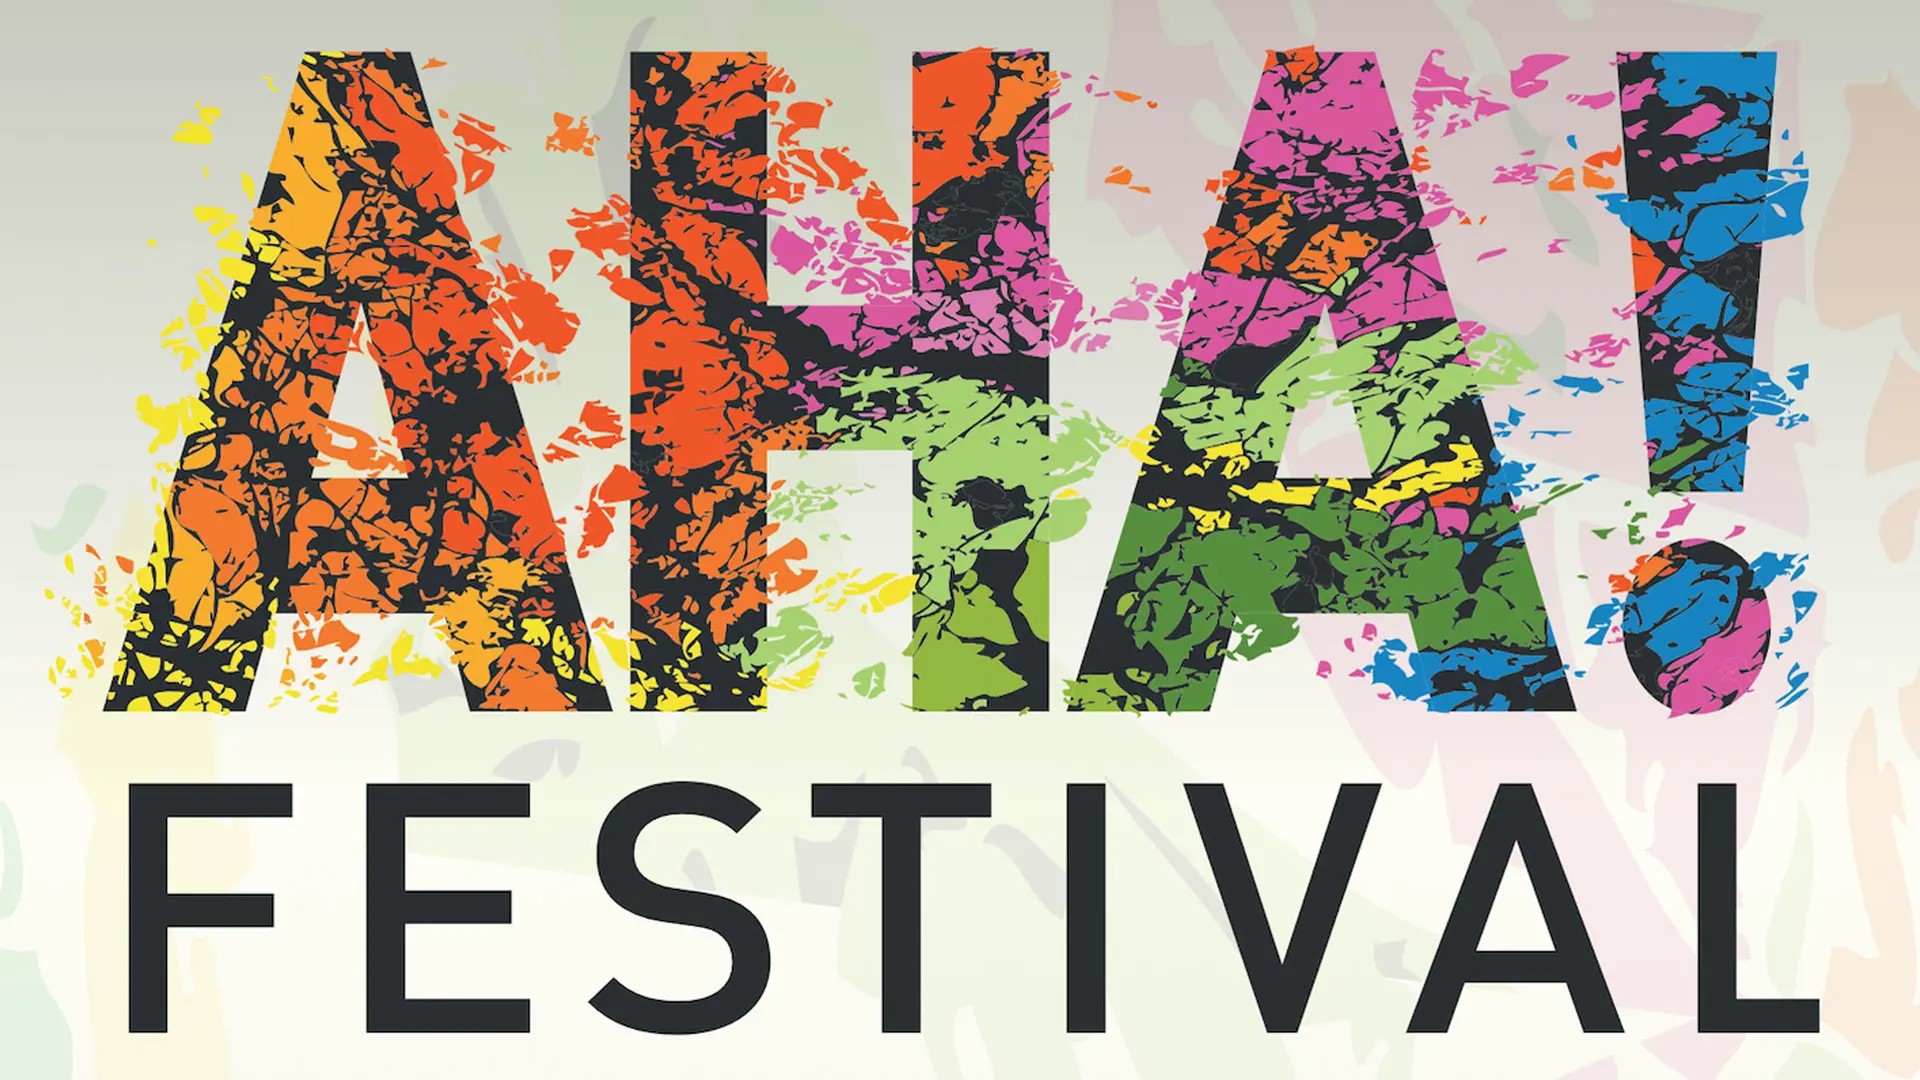 Aha festival logo saying AHA! FESTIVAL